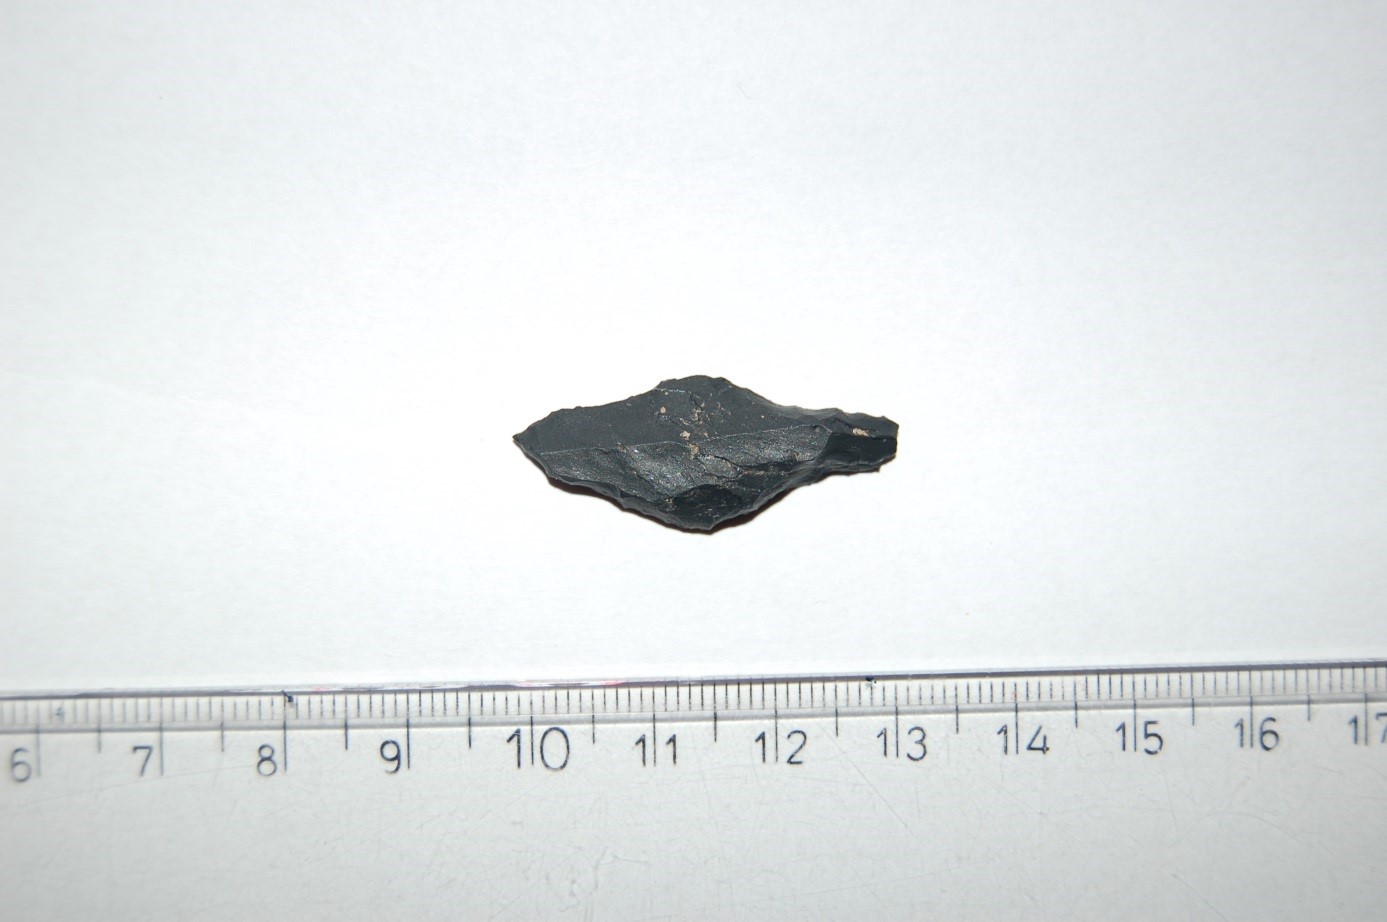 En fin pilespiss av svart chert, ca. 3 cm lang.